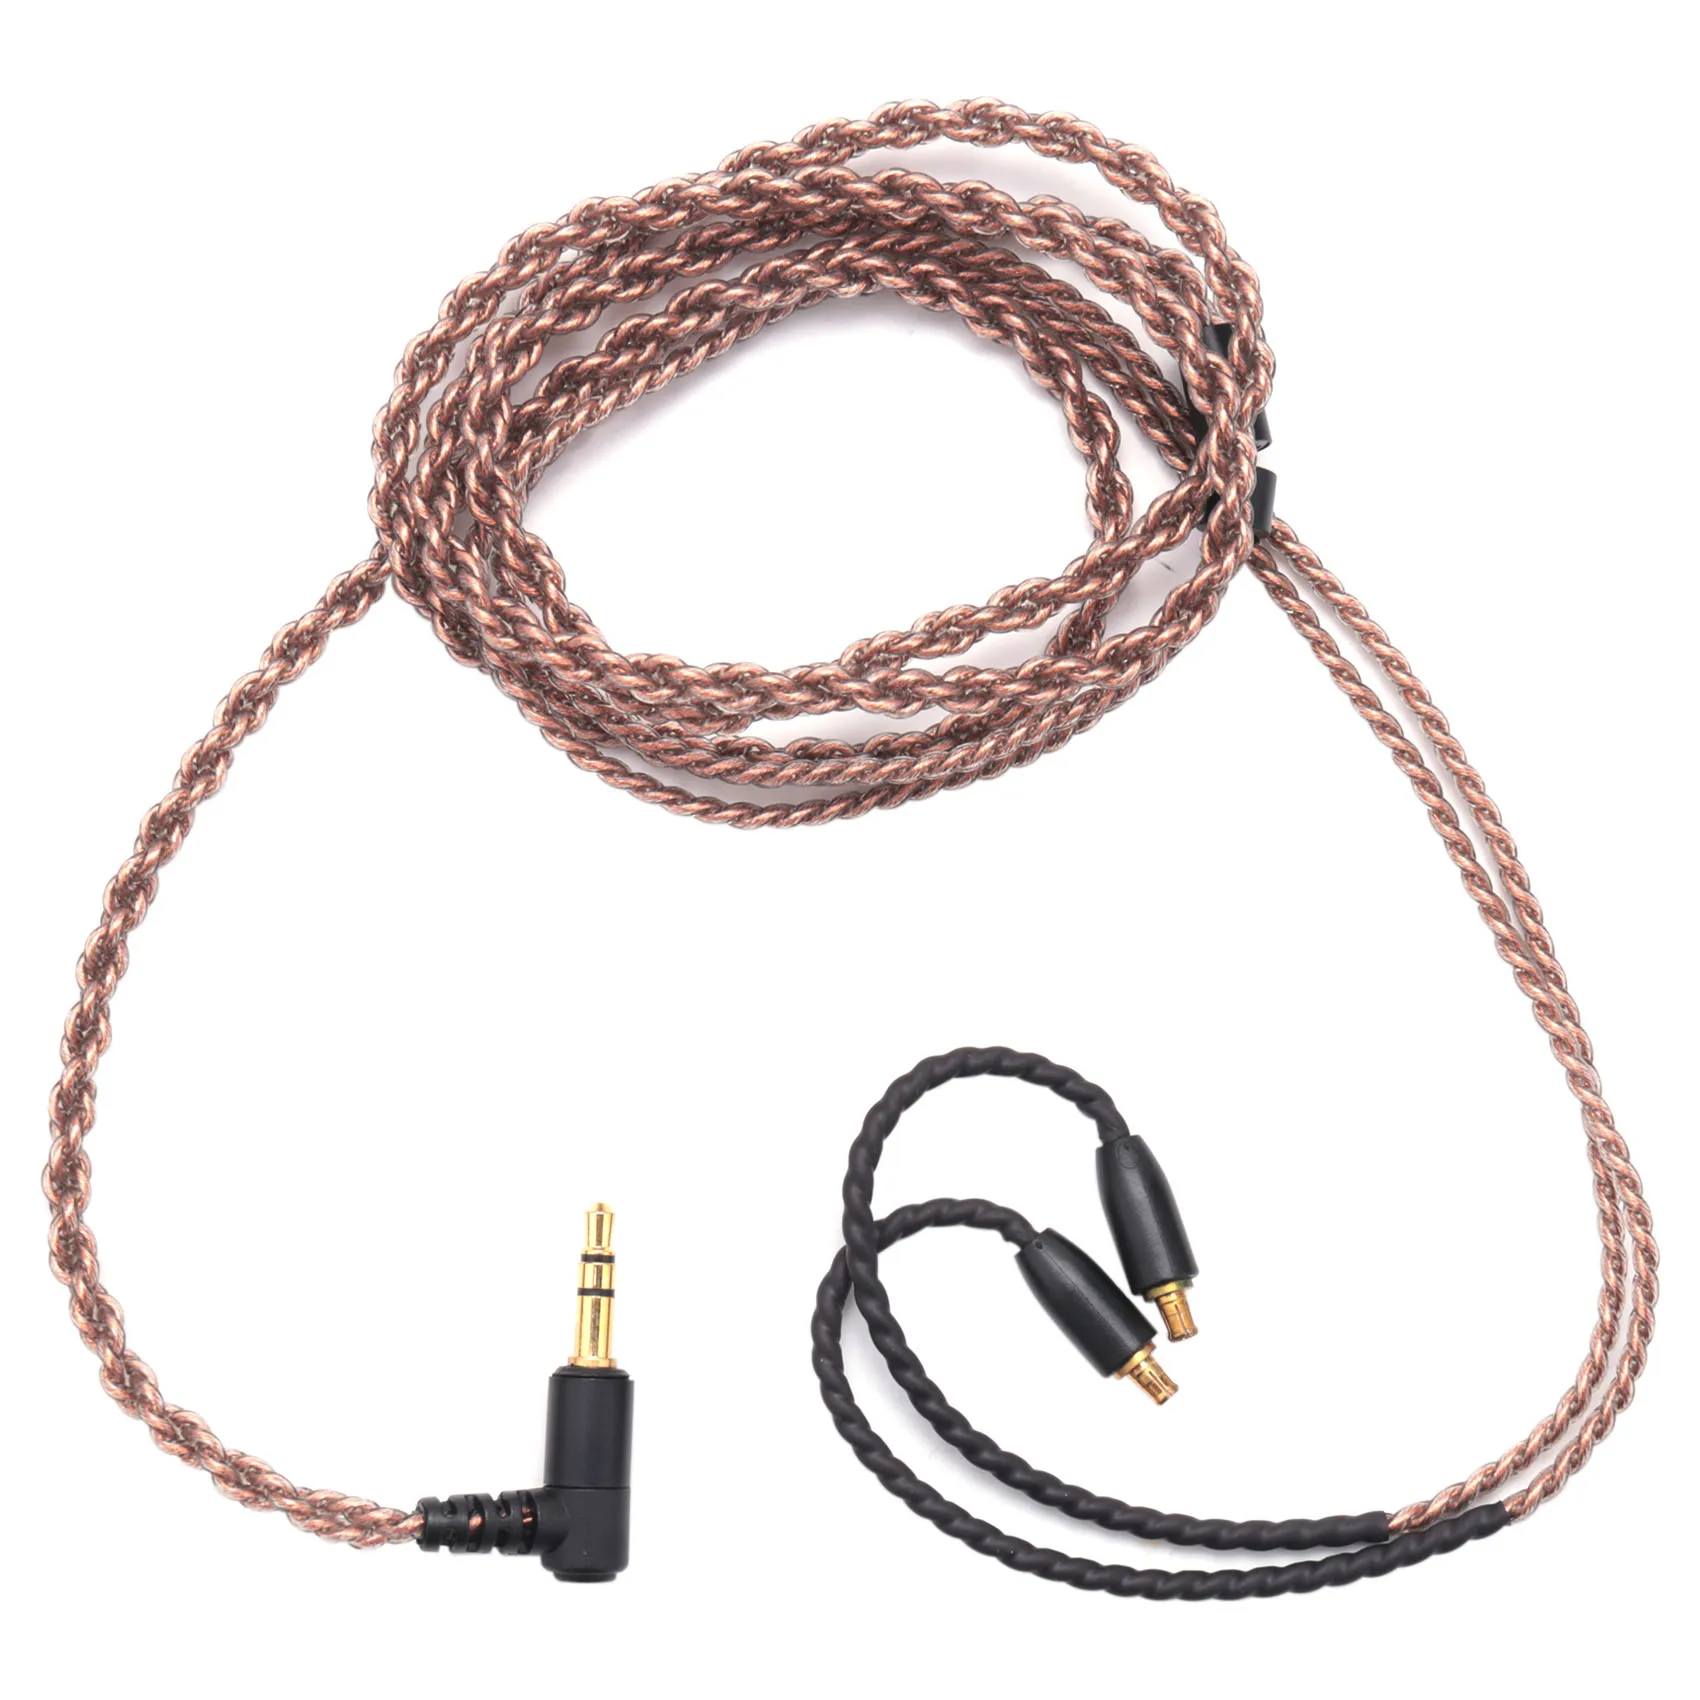 

A2Dc Connector Pure Copper Cable For Ath Headset Cks1100 E40 E50 E70 Ls200 Ls300 Ls400 Ckr90 Ckr100 Ls50 Ls70 Headphones